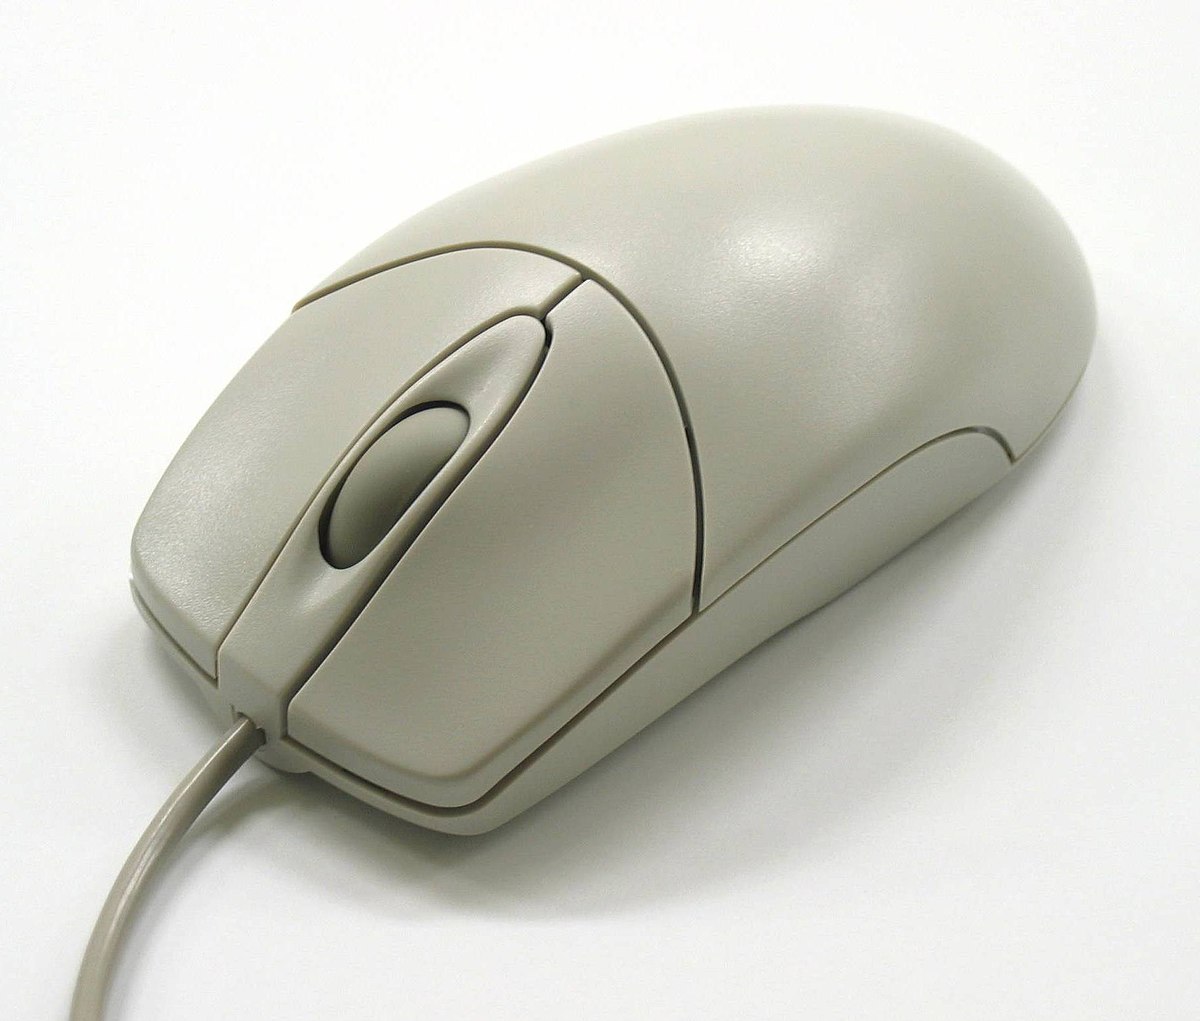 Mouse - Wikipedia